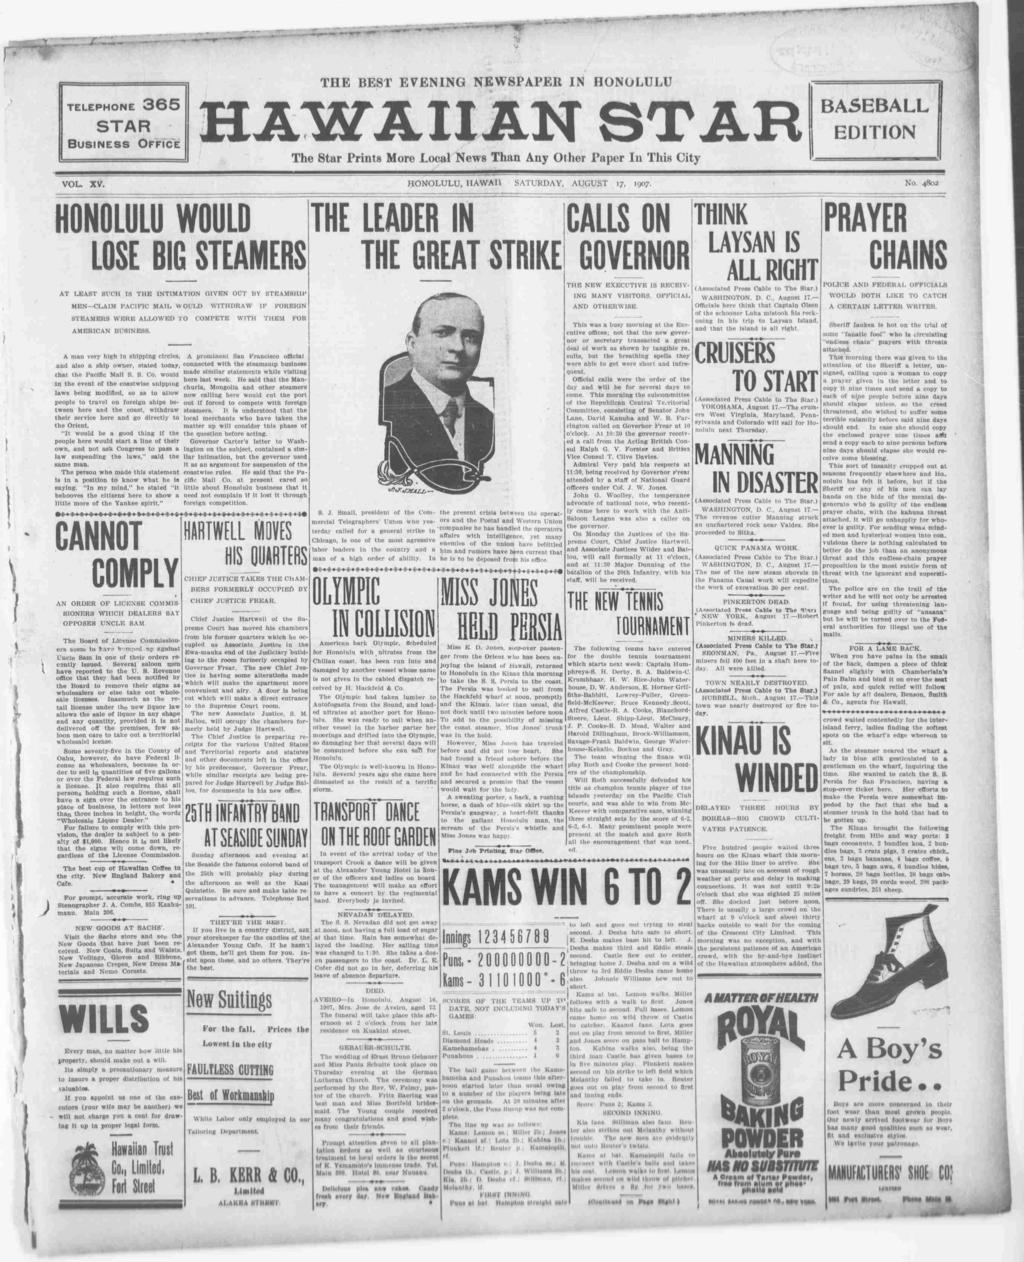 TELEPHONE STAR 365 K TT EM TAR BASEBALL EDTON Busness Offce The Star Prnts More Local News Than Any Or Paper n Ths Cty VOL. XV. HONOLULU, HAWA SATURDAY, AUGUST 17, 1907. No.